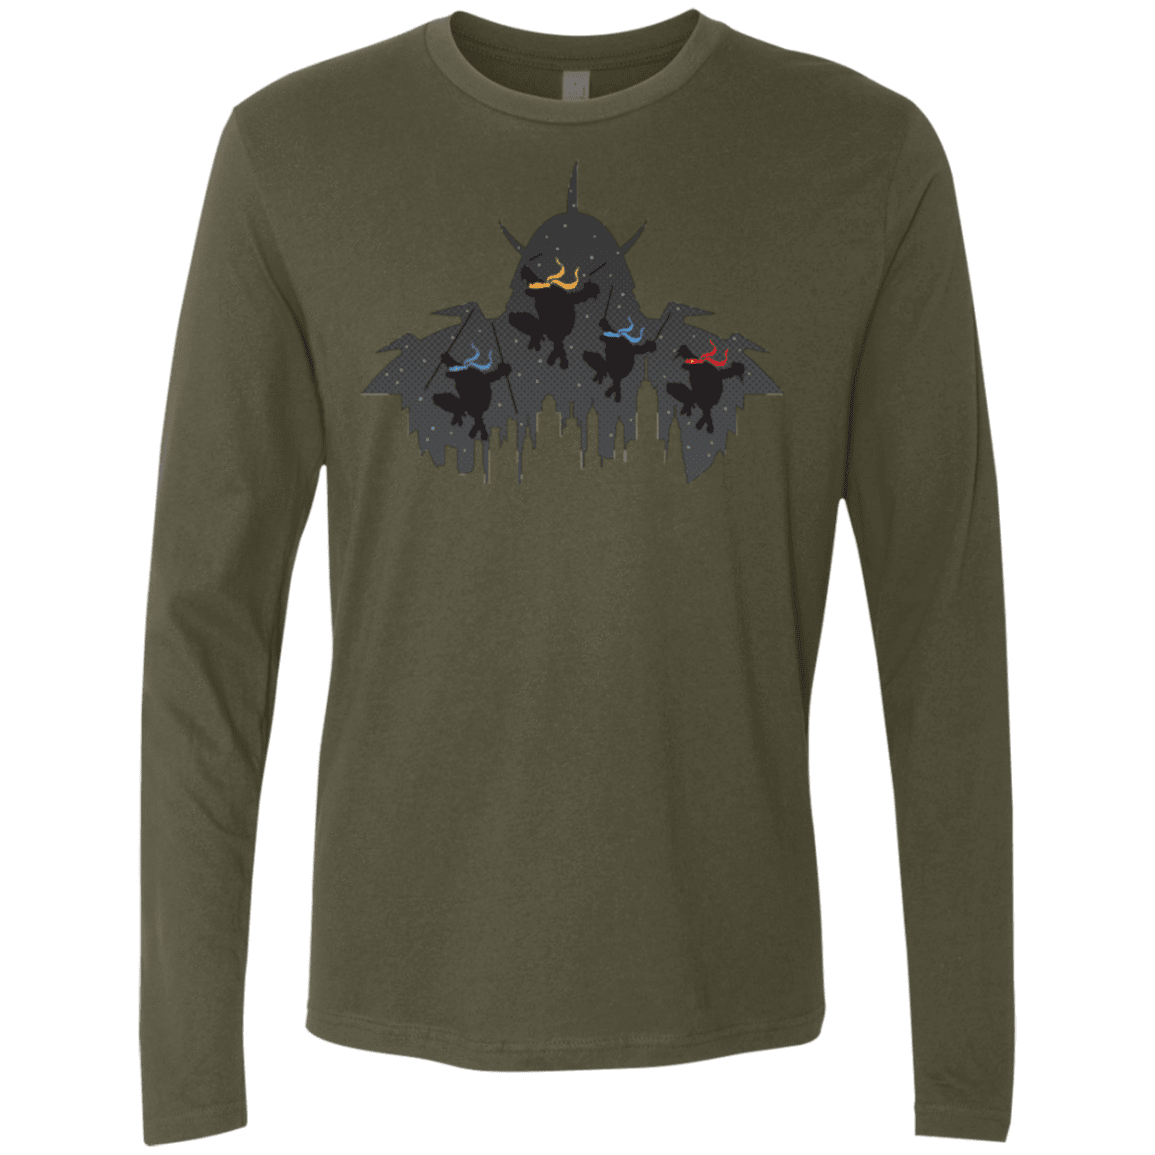 T-Shirts Military Green / Small Turtles Men's Premium Long Sleeve